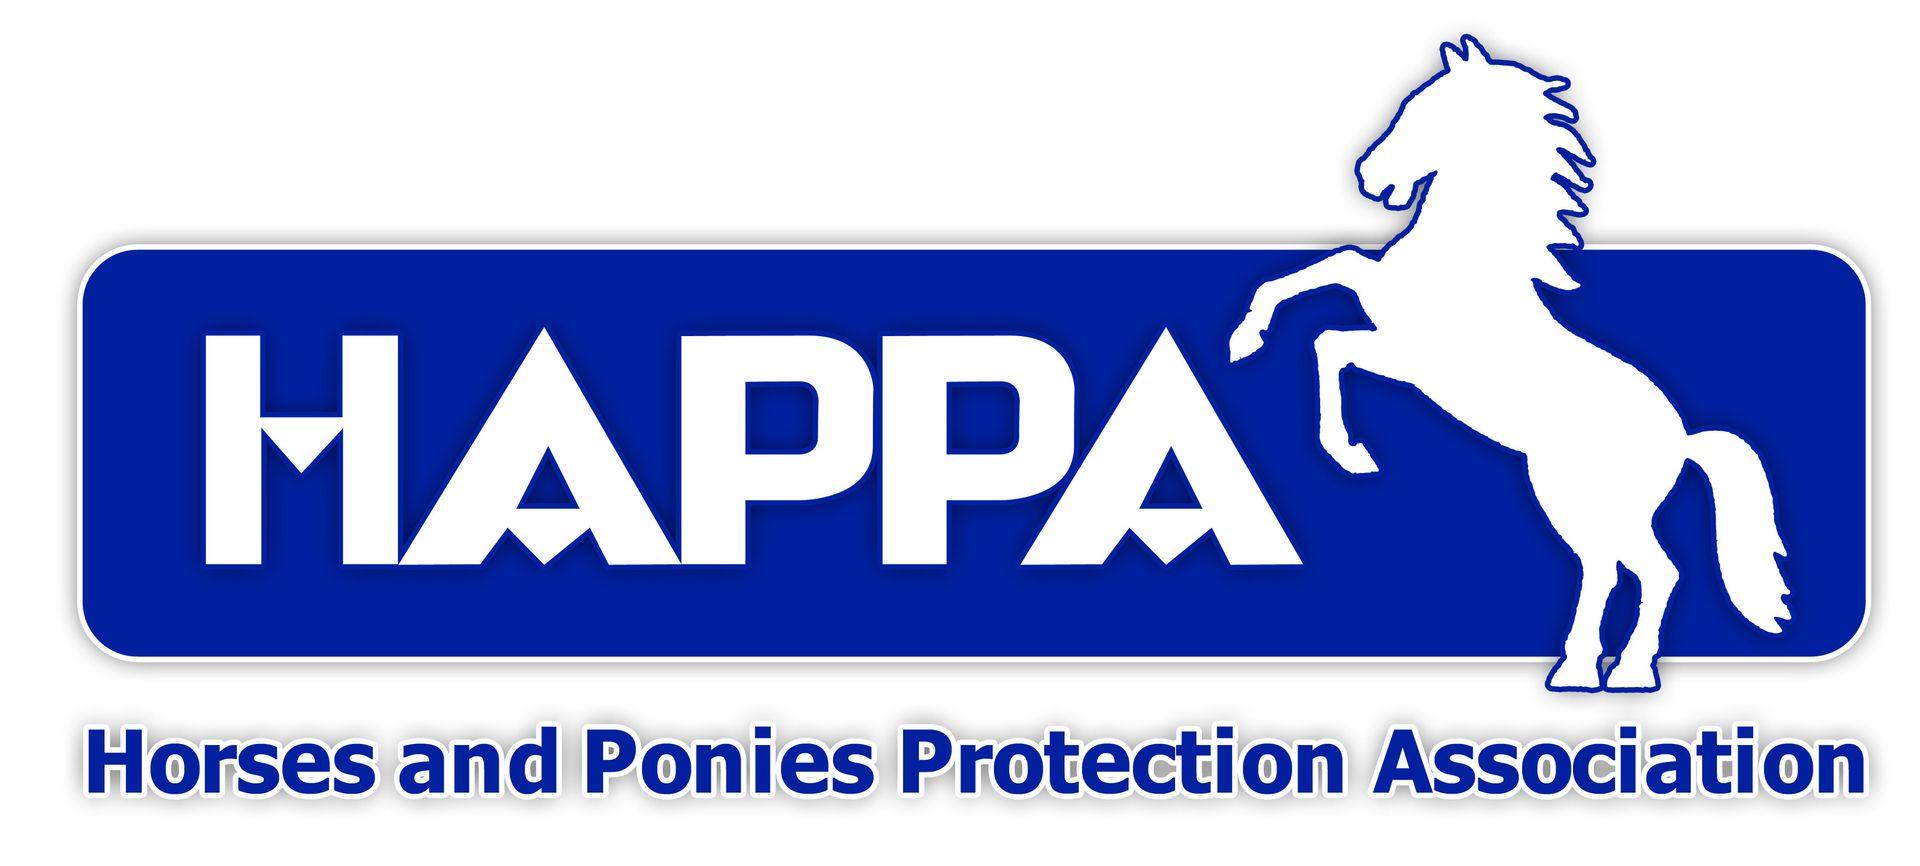 Happa Logo - handy treats ltd. happa horses. ponies